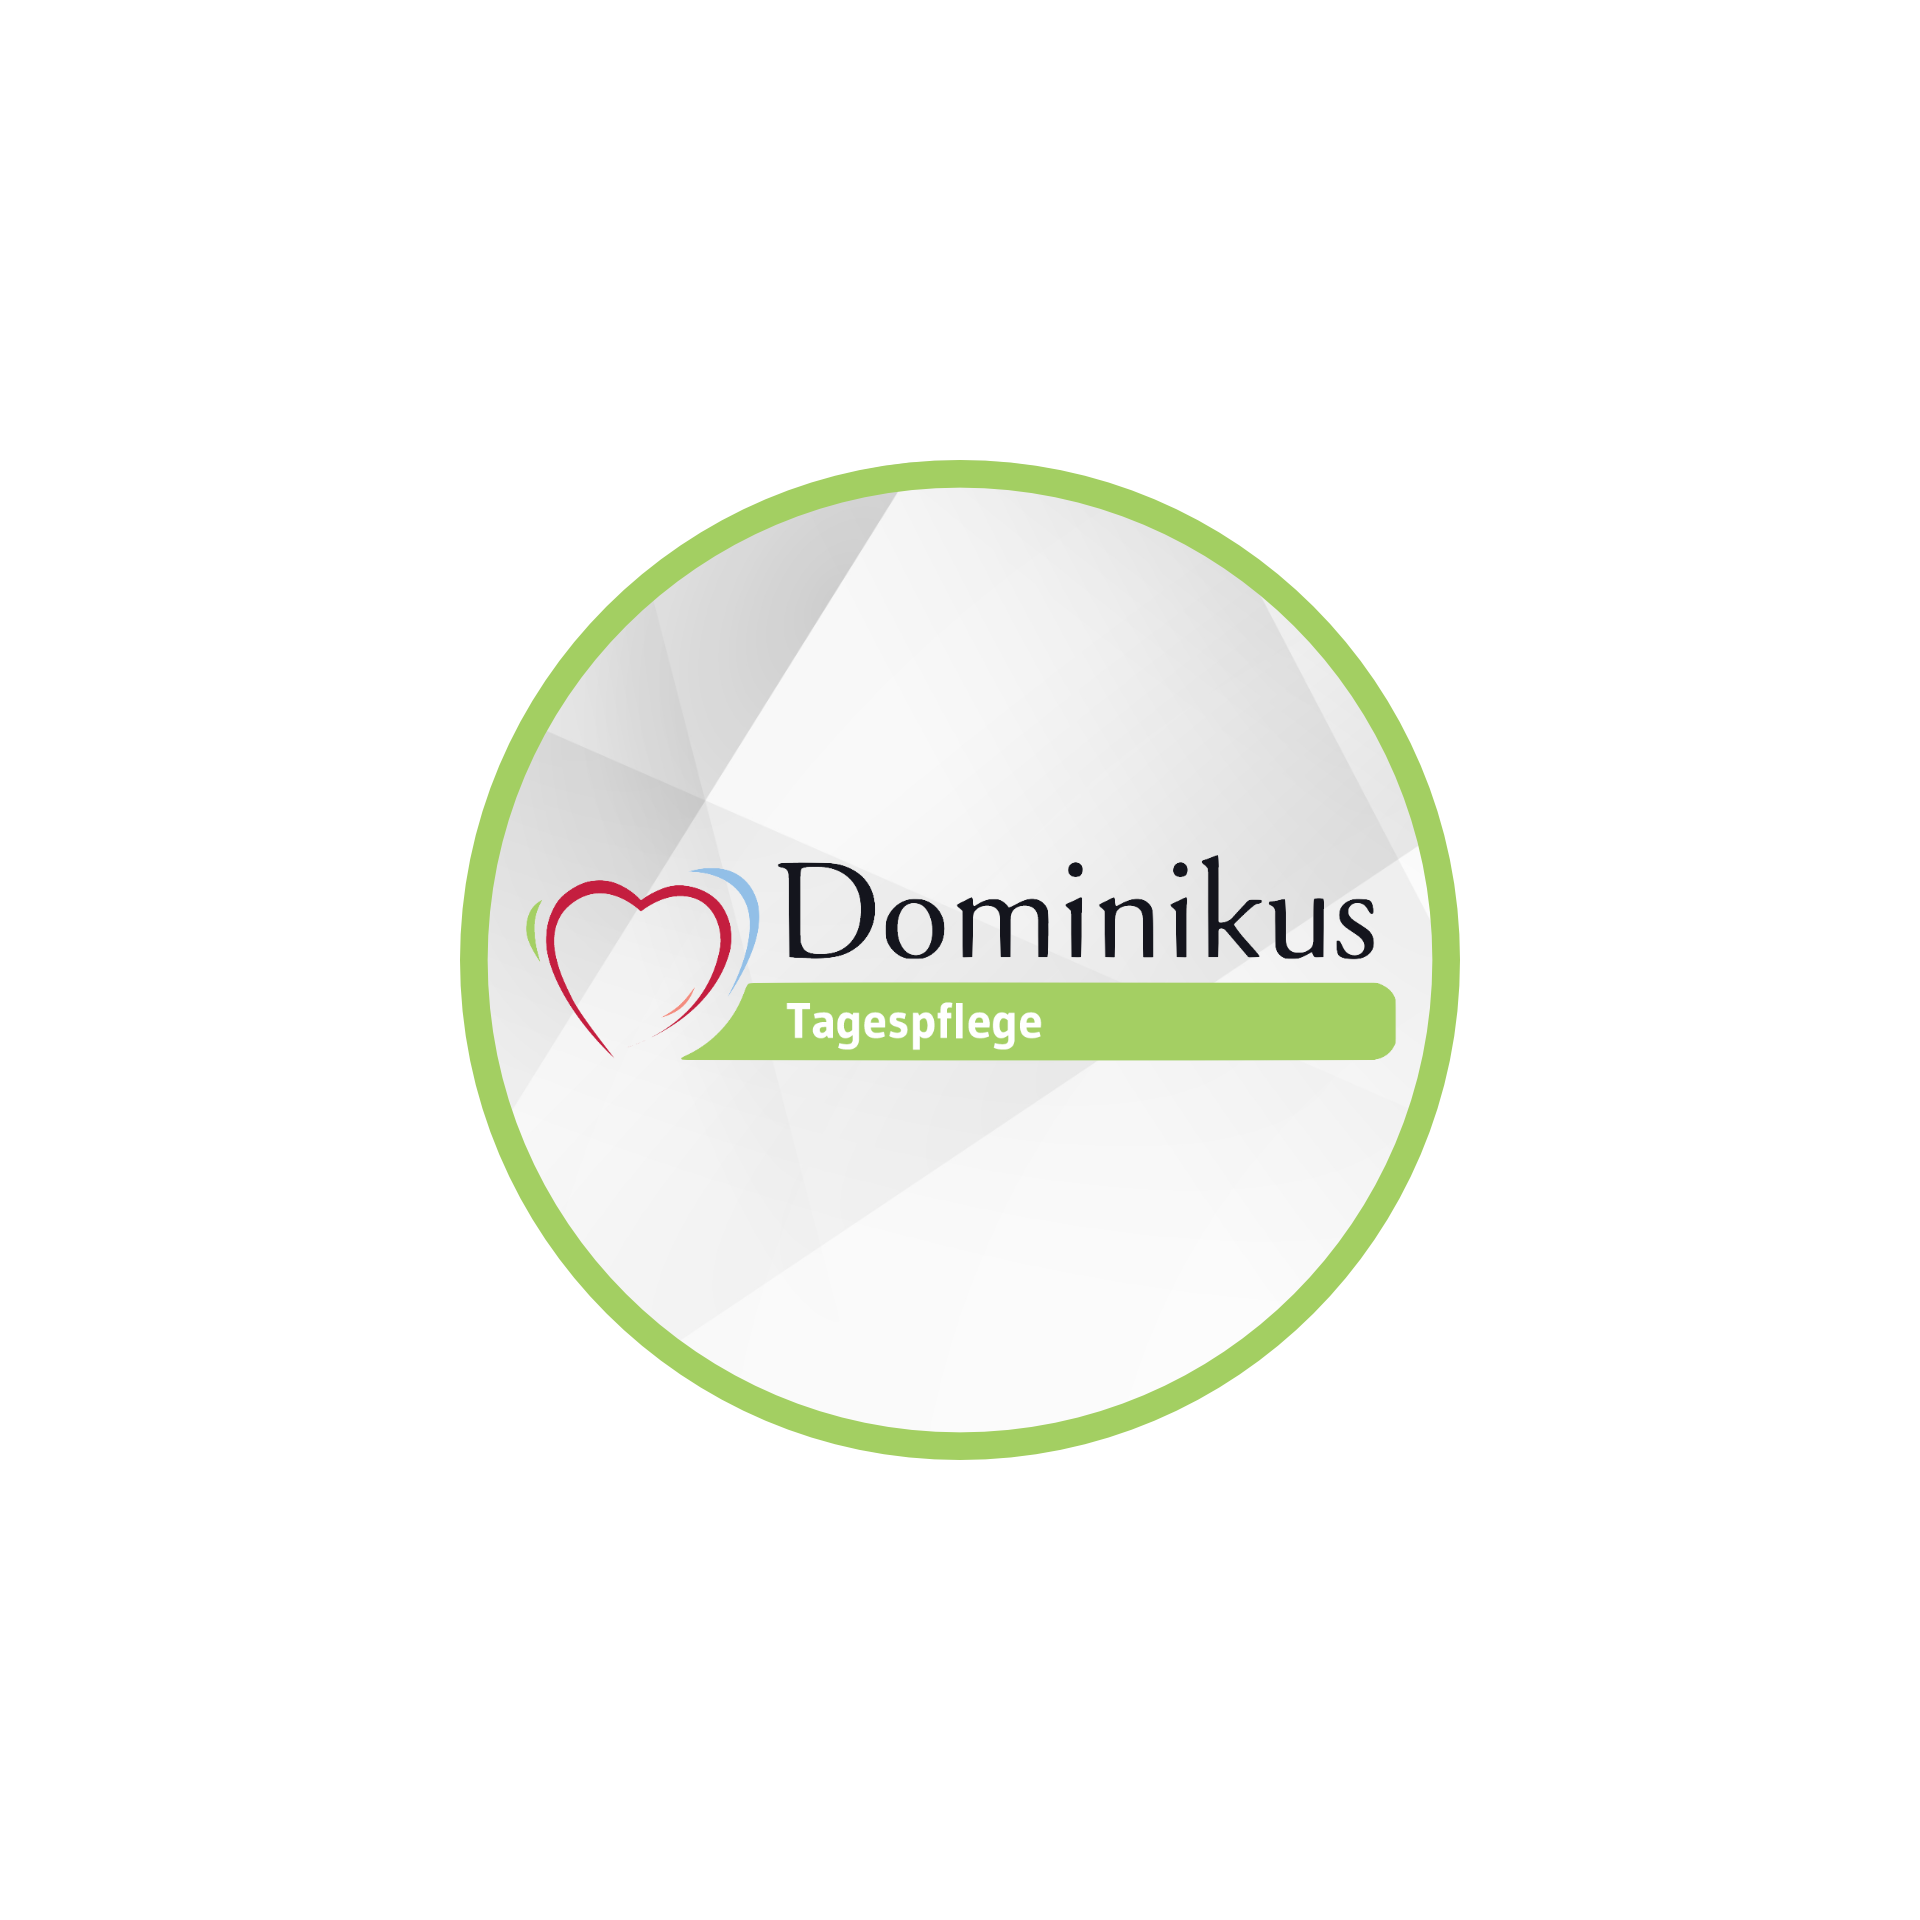 Dominikus Tagespflege in Hohenberg an der Eger - Logo